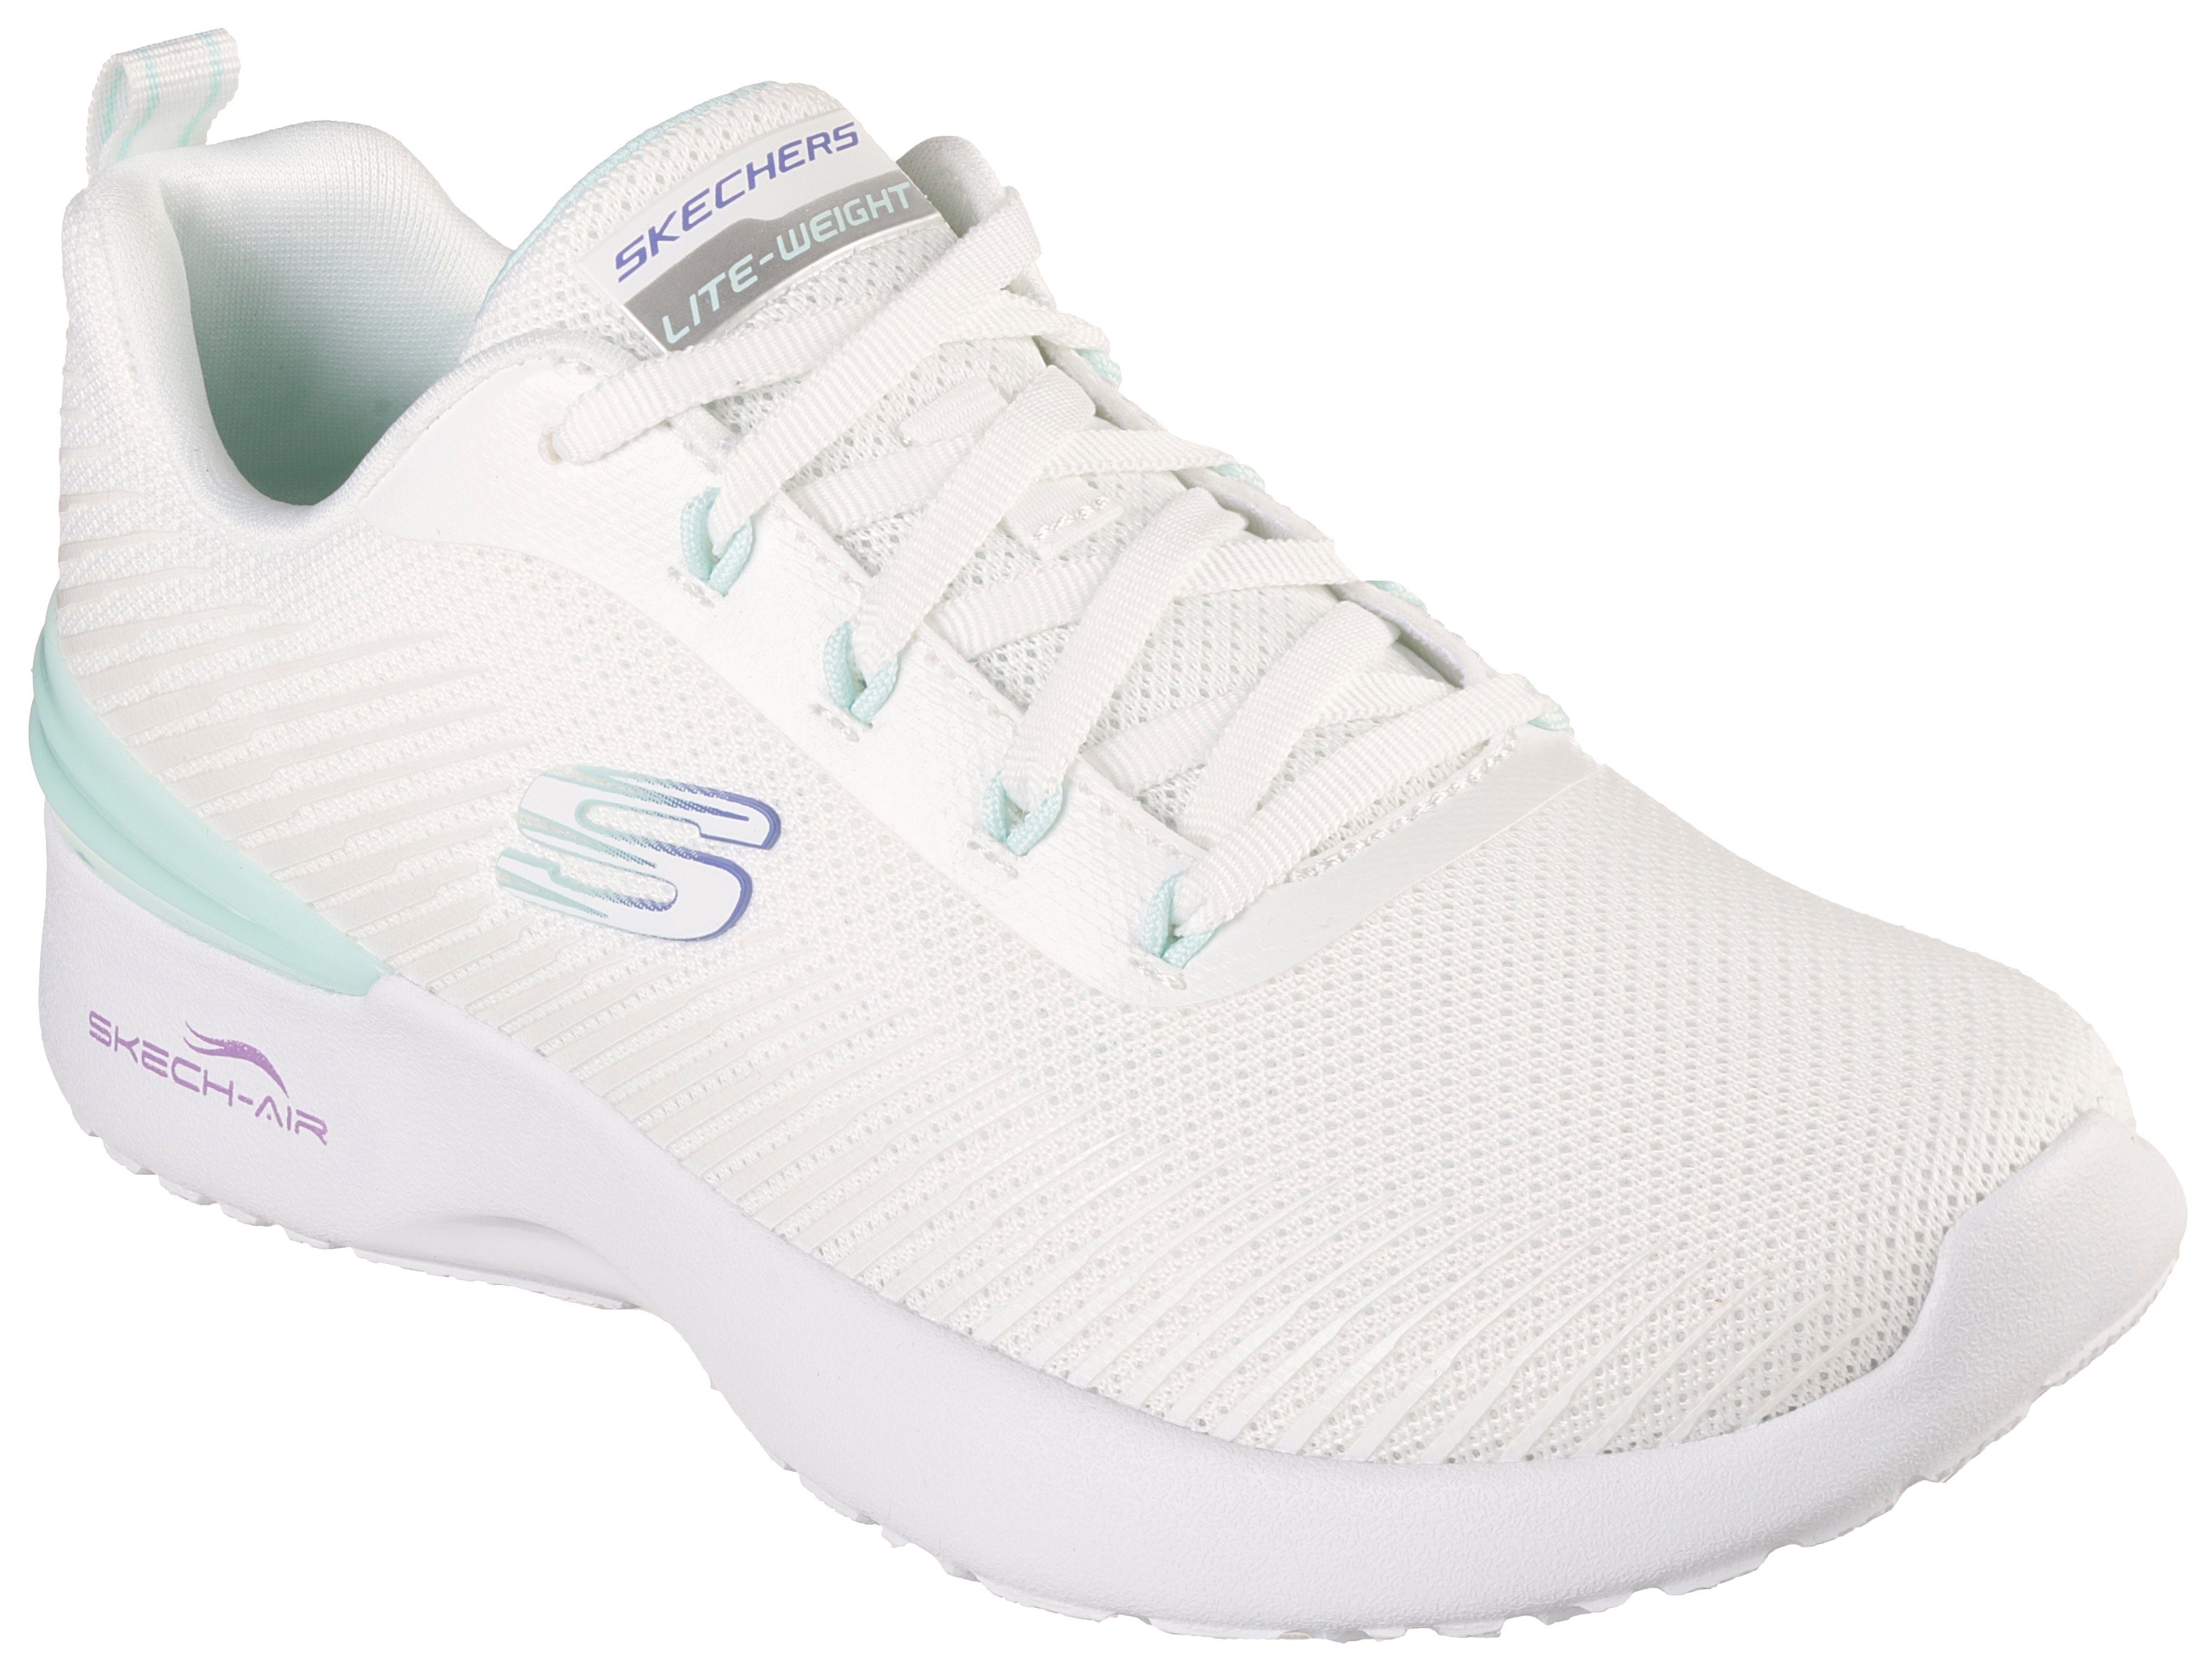 LUMINOSITY DYNAMIGHT Ausstattung Memory Sneaker Skechers mit SKECH-AIR weiß-mint Foam